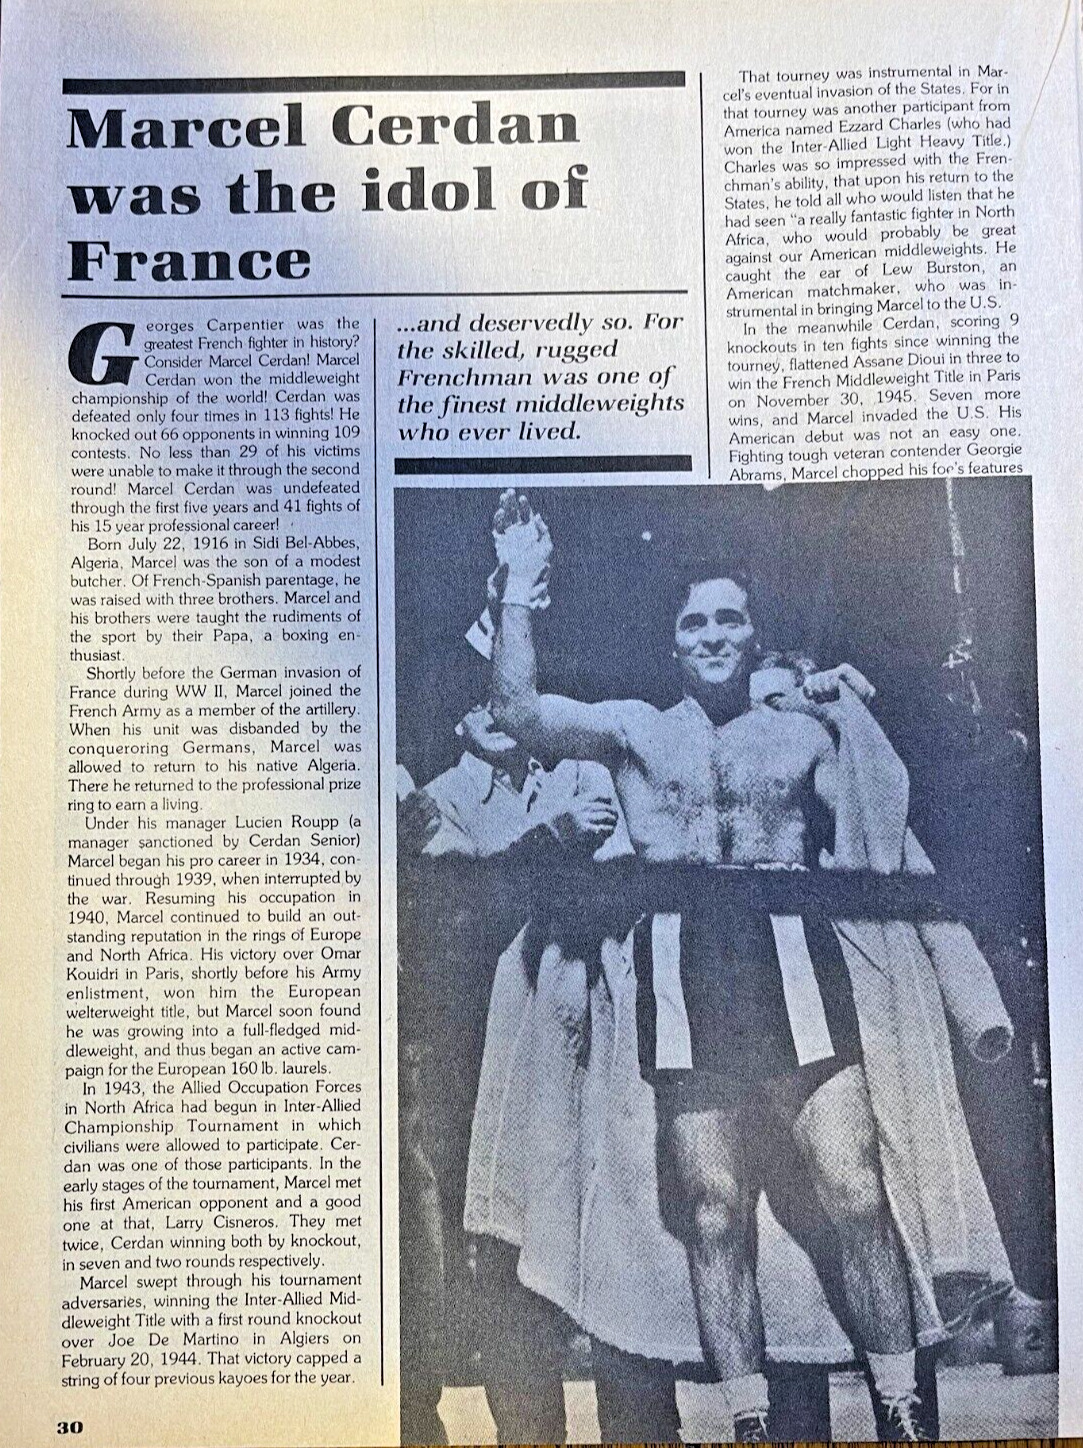 1981 French Boxer Marcel Cerdan